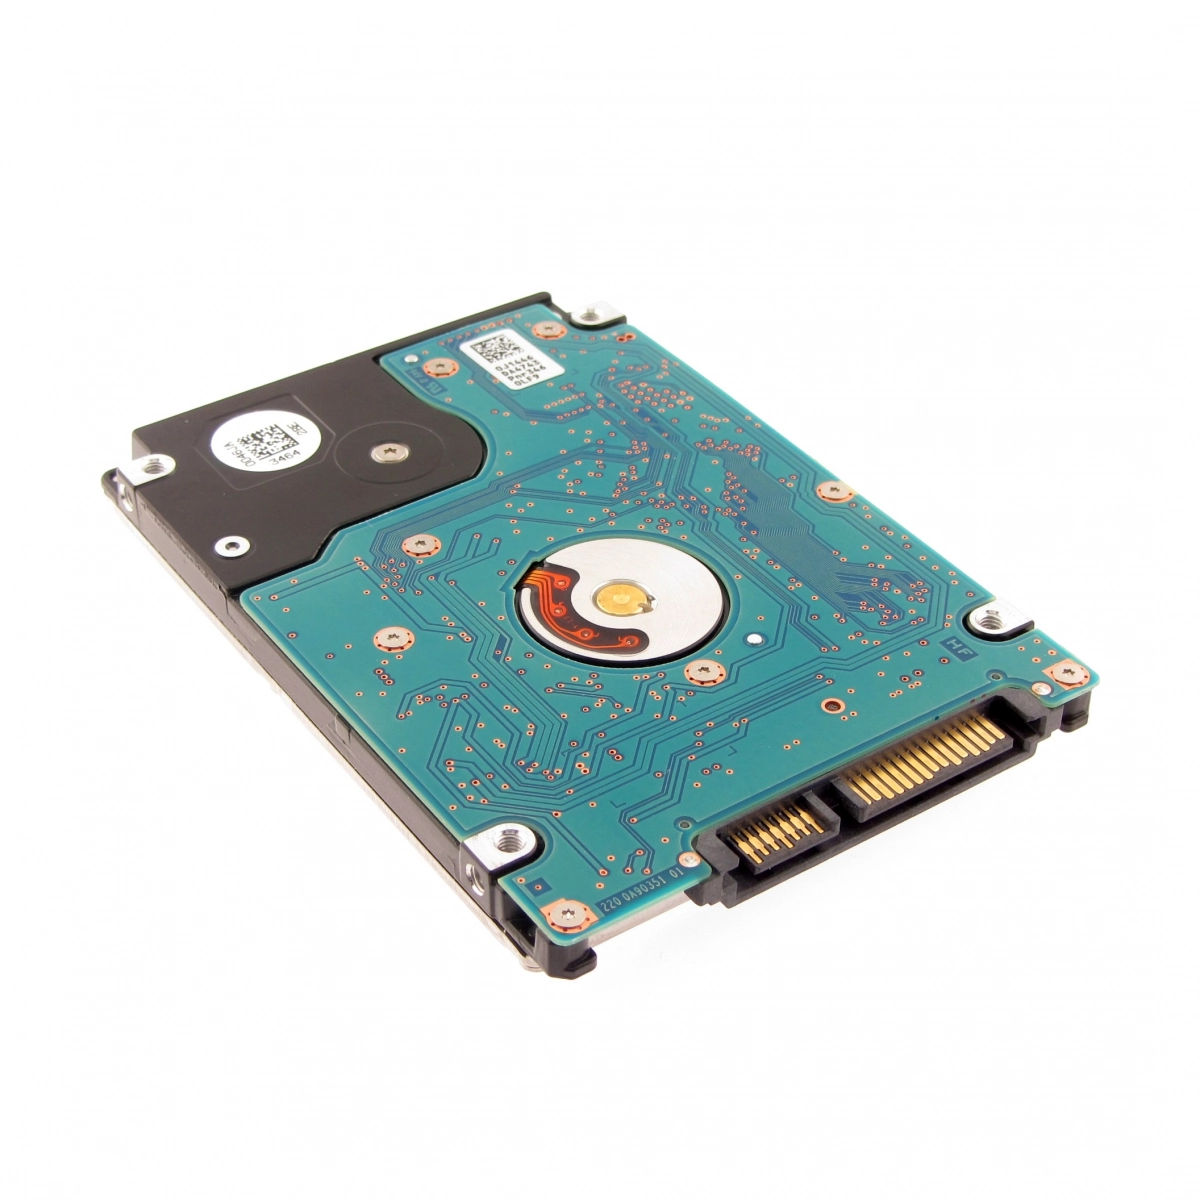 Notebook-Festplatte 1TB, 7mm, 7200rpm, 128MB für HP Pavilion dv7-1070